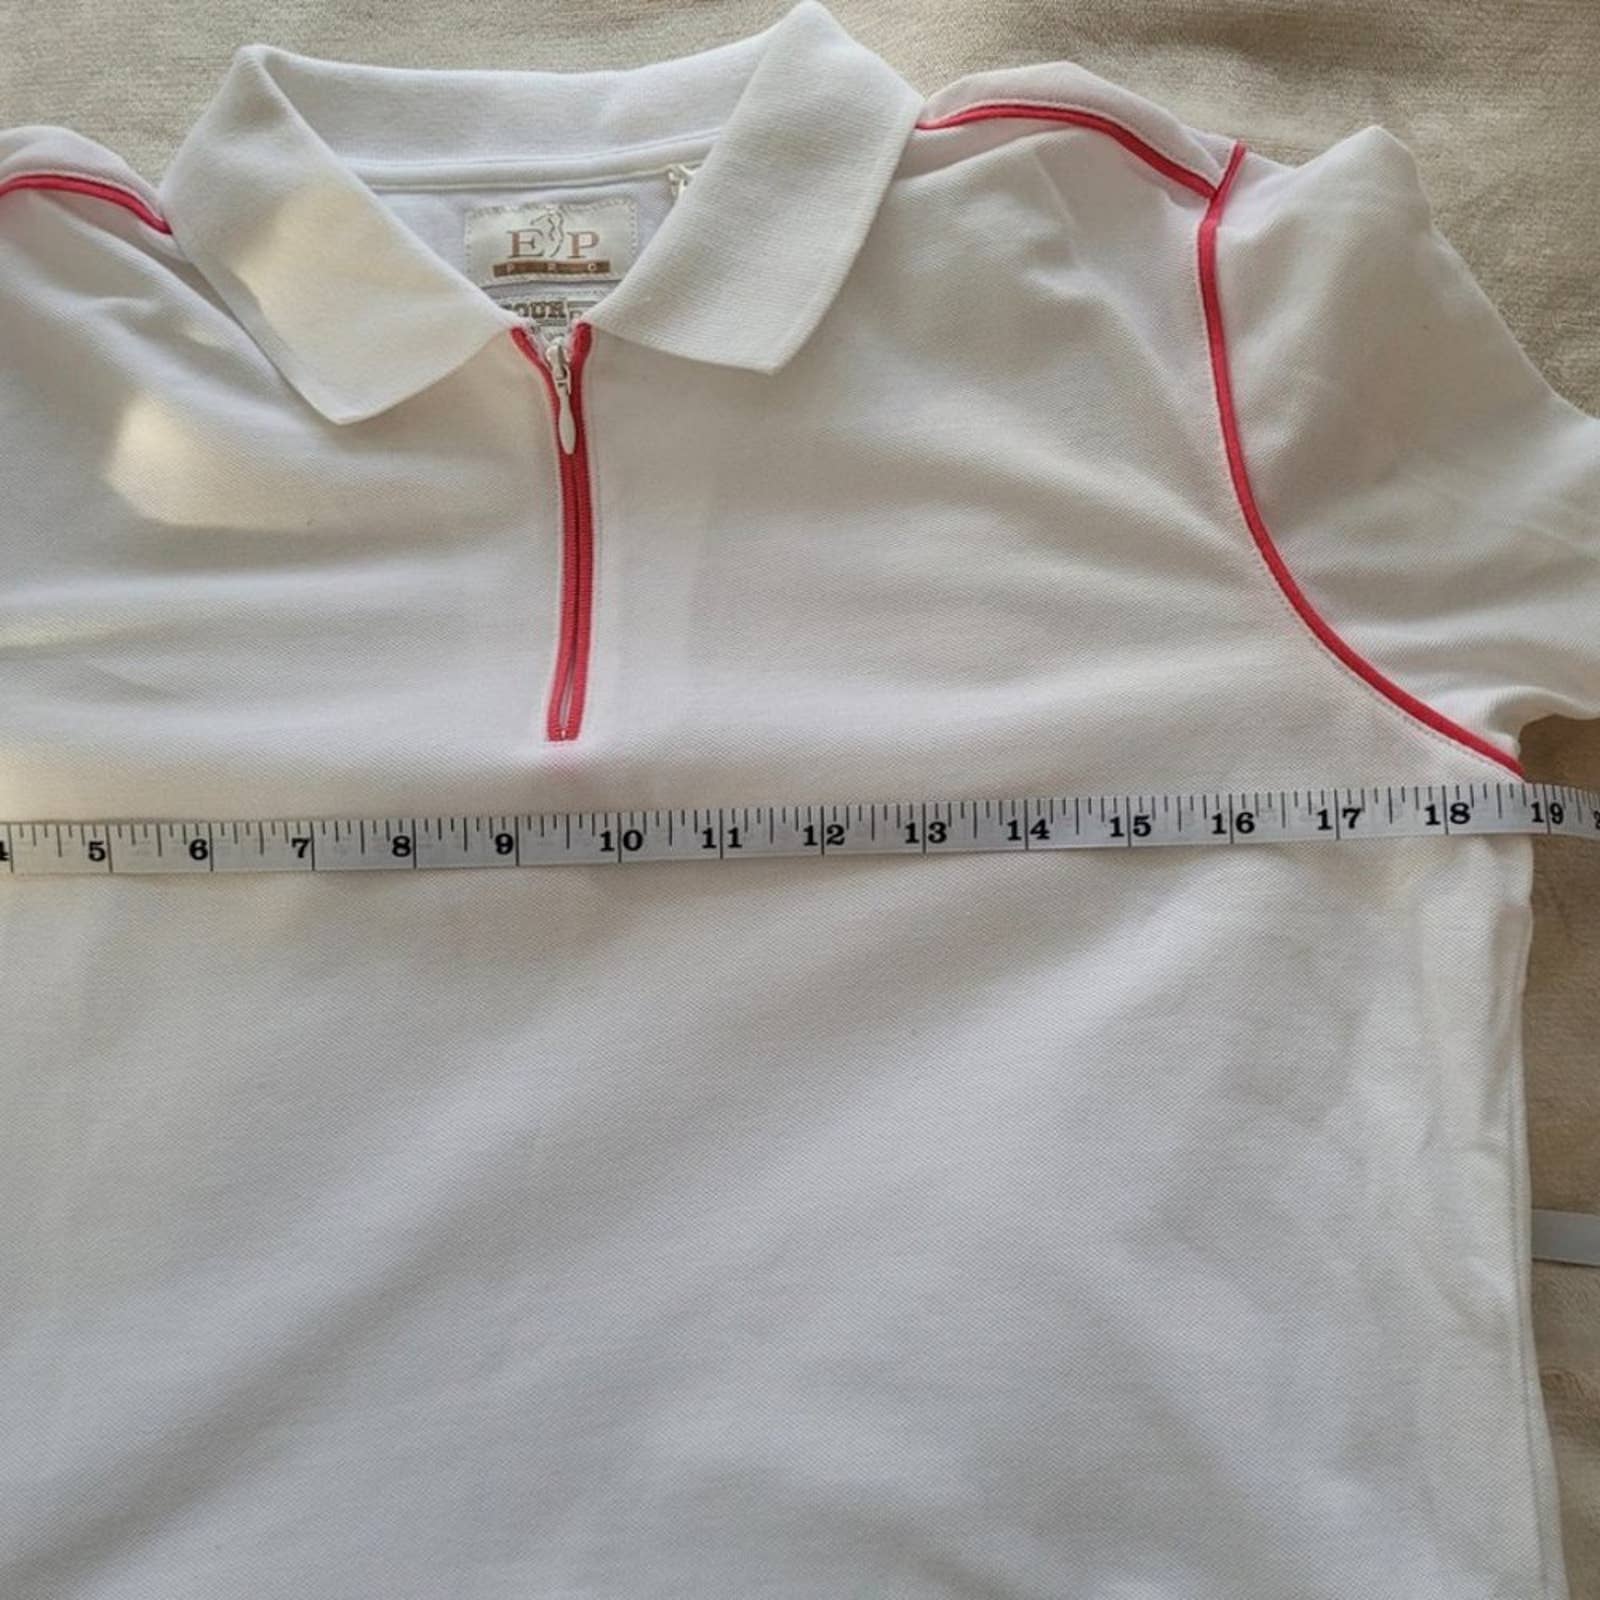 EP Pro White Golf T-Shirt with Pink Piping - Size MediumMarkita's ClosetEP Pro